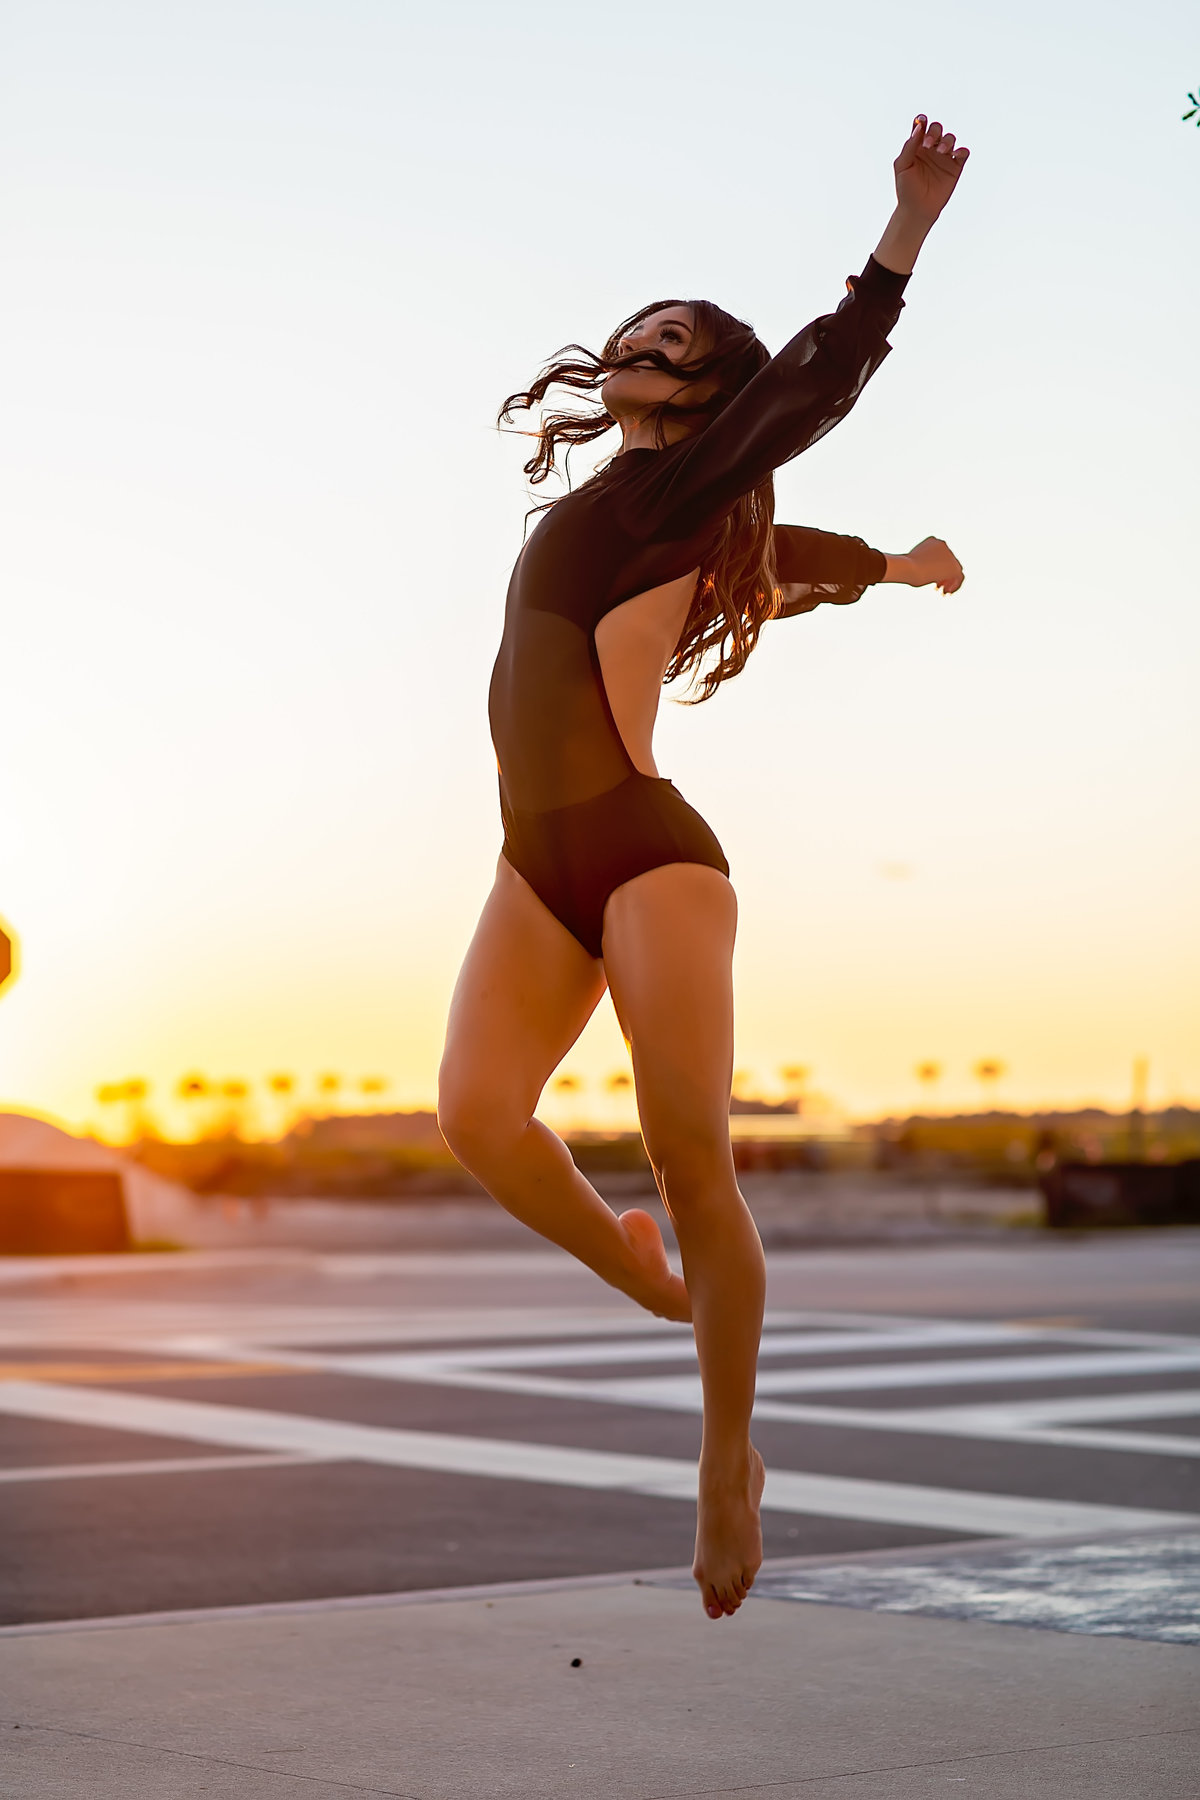 dancer jump at sunset shot by collette mruk